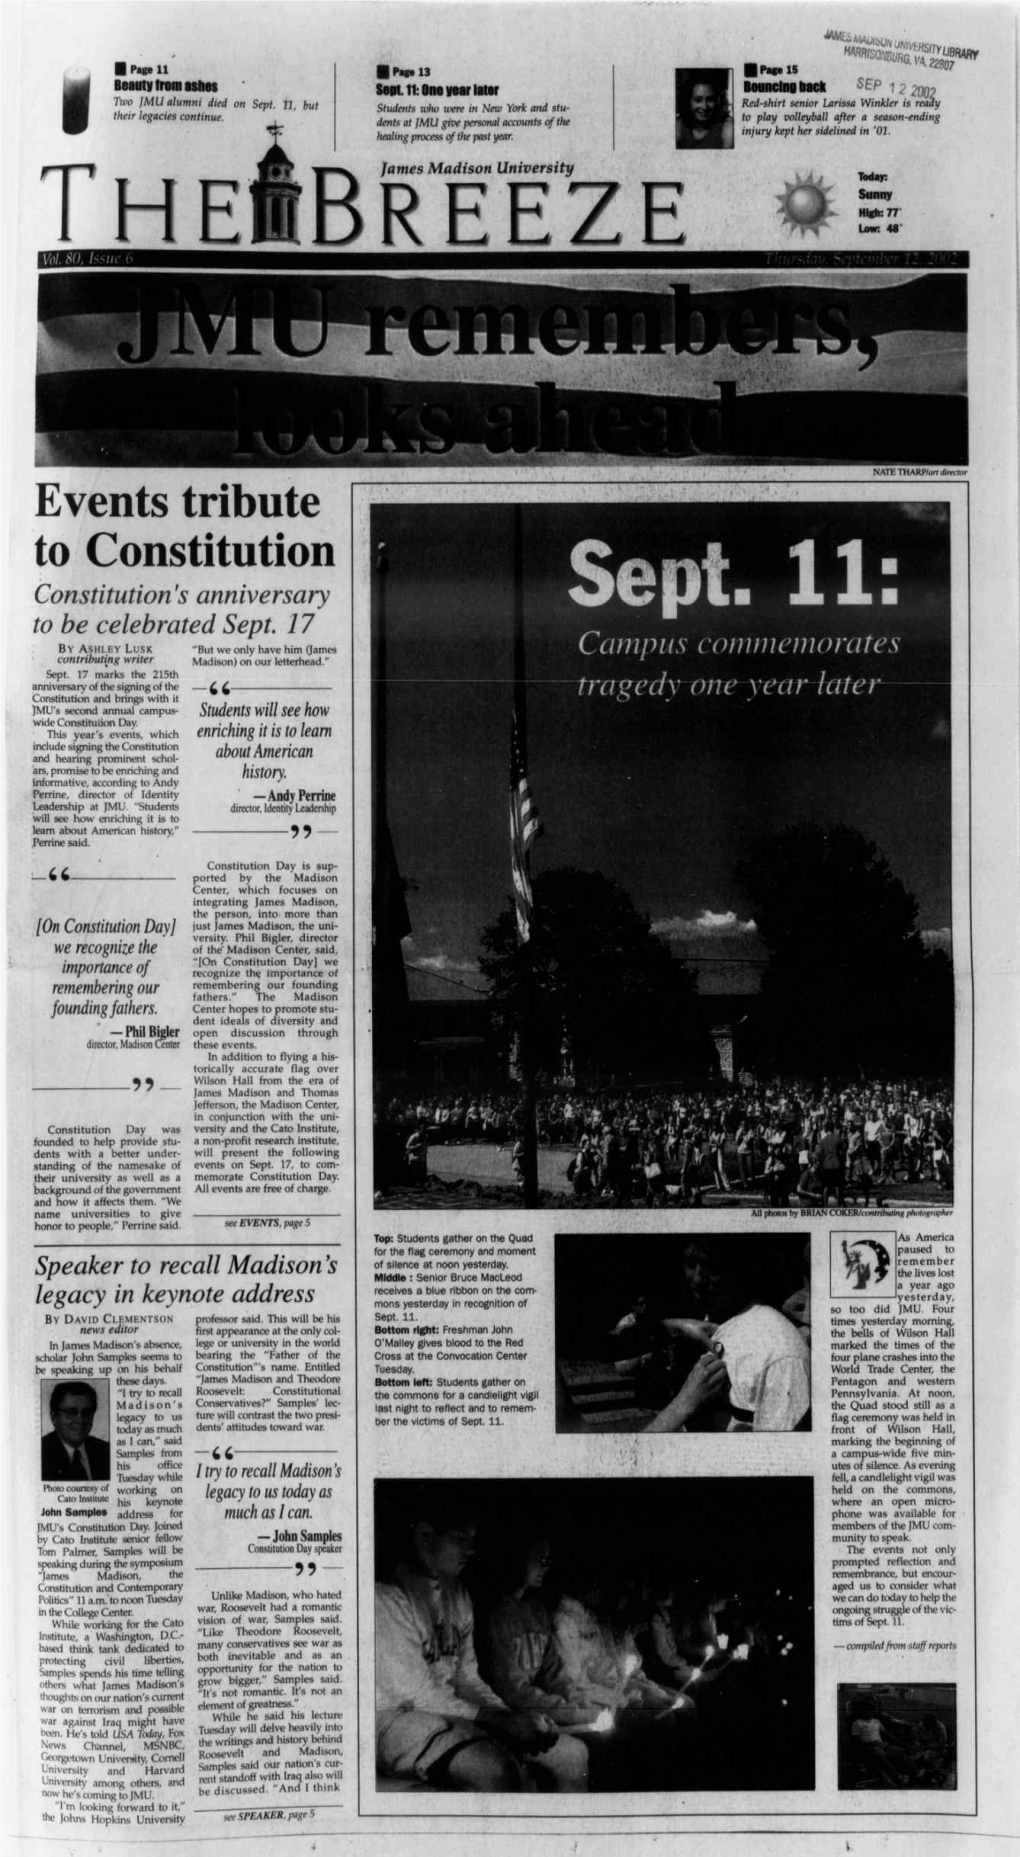 September 12, 2002 DUKE DAYS EVENTS CALENDAR TABLE of CONTENTS THURSDAY, SEPTEMBER 12 SUNDAY, SEPTEMBER 15 NEWS • Women S Club Softball in Mils Thursday and Friday